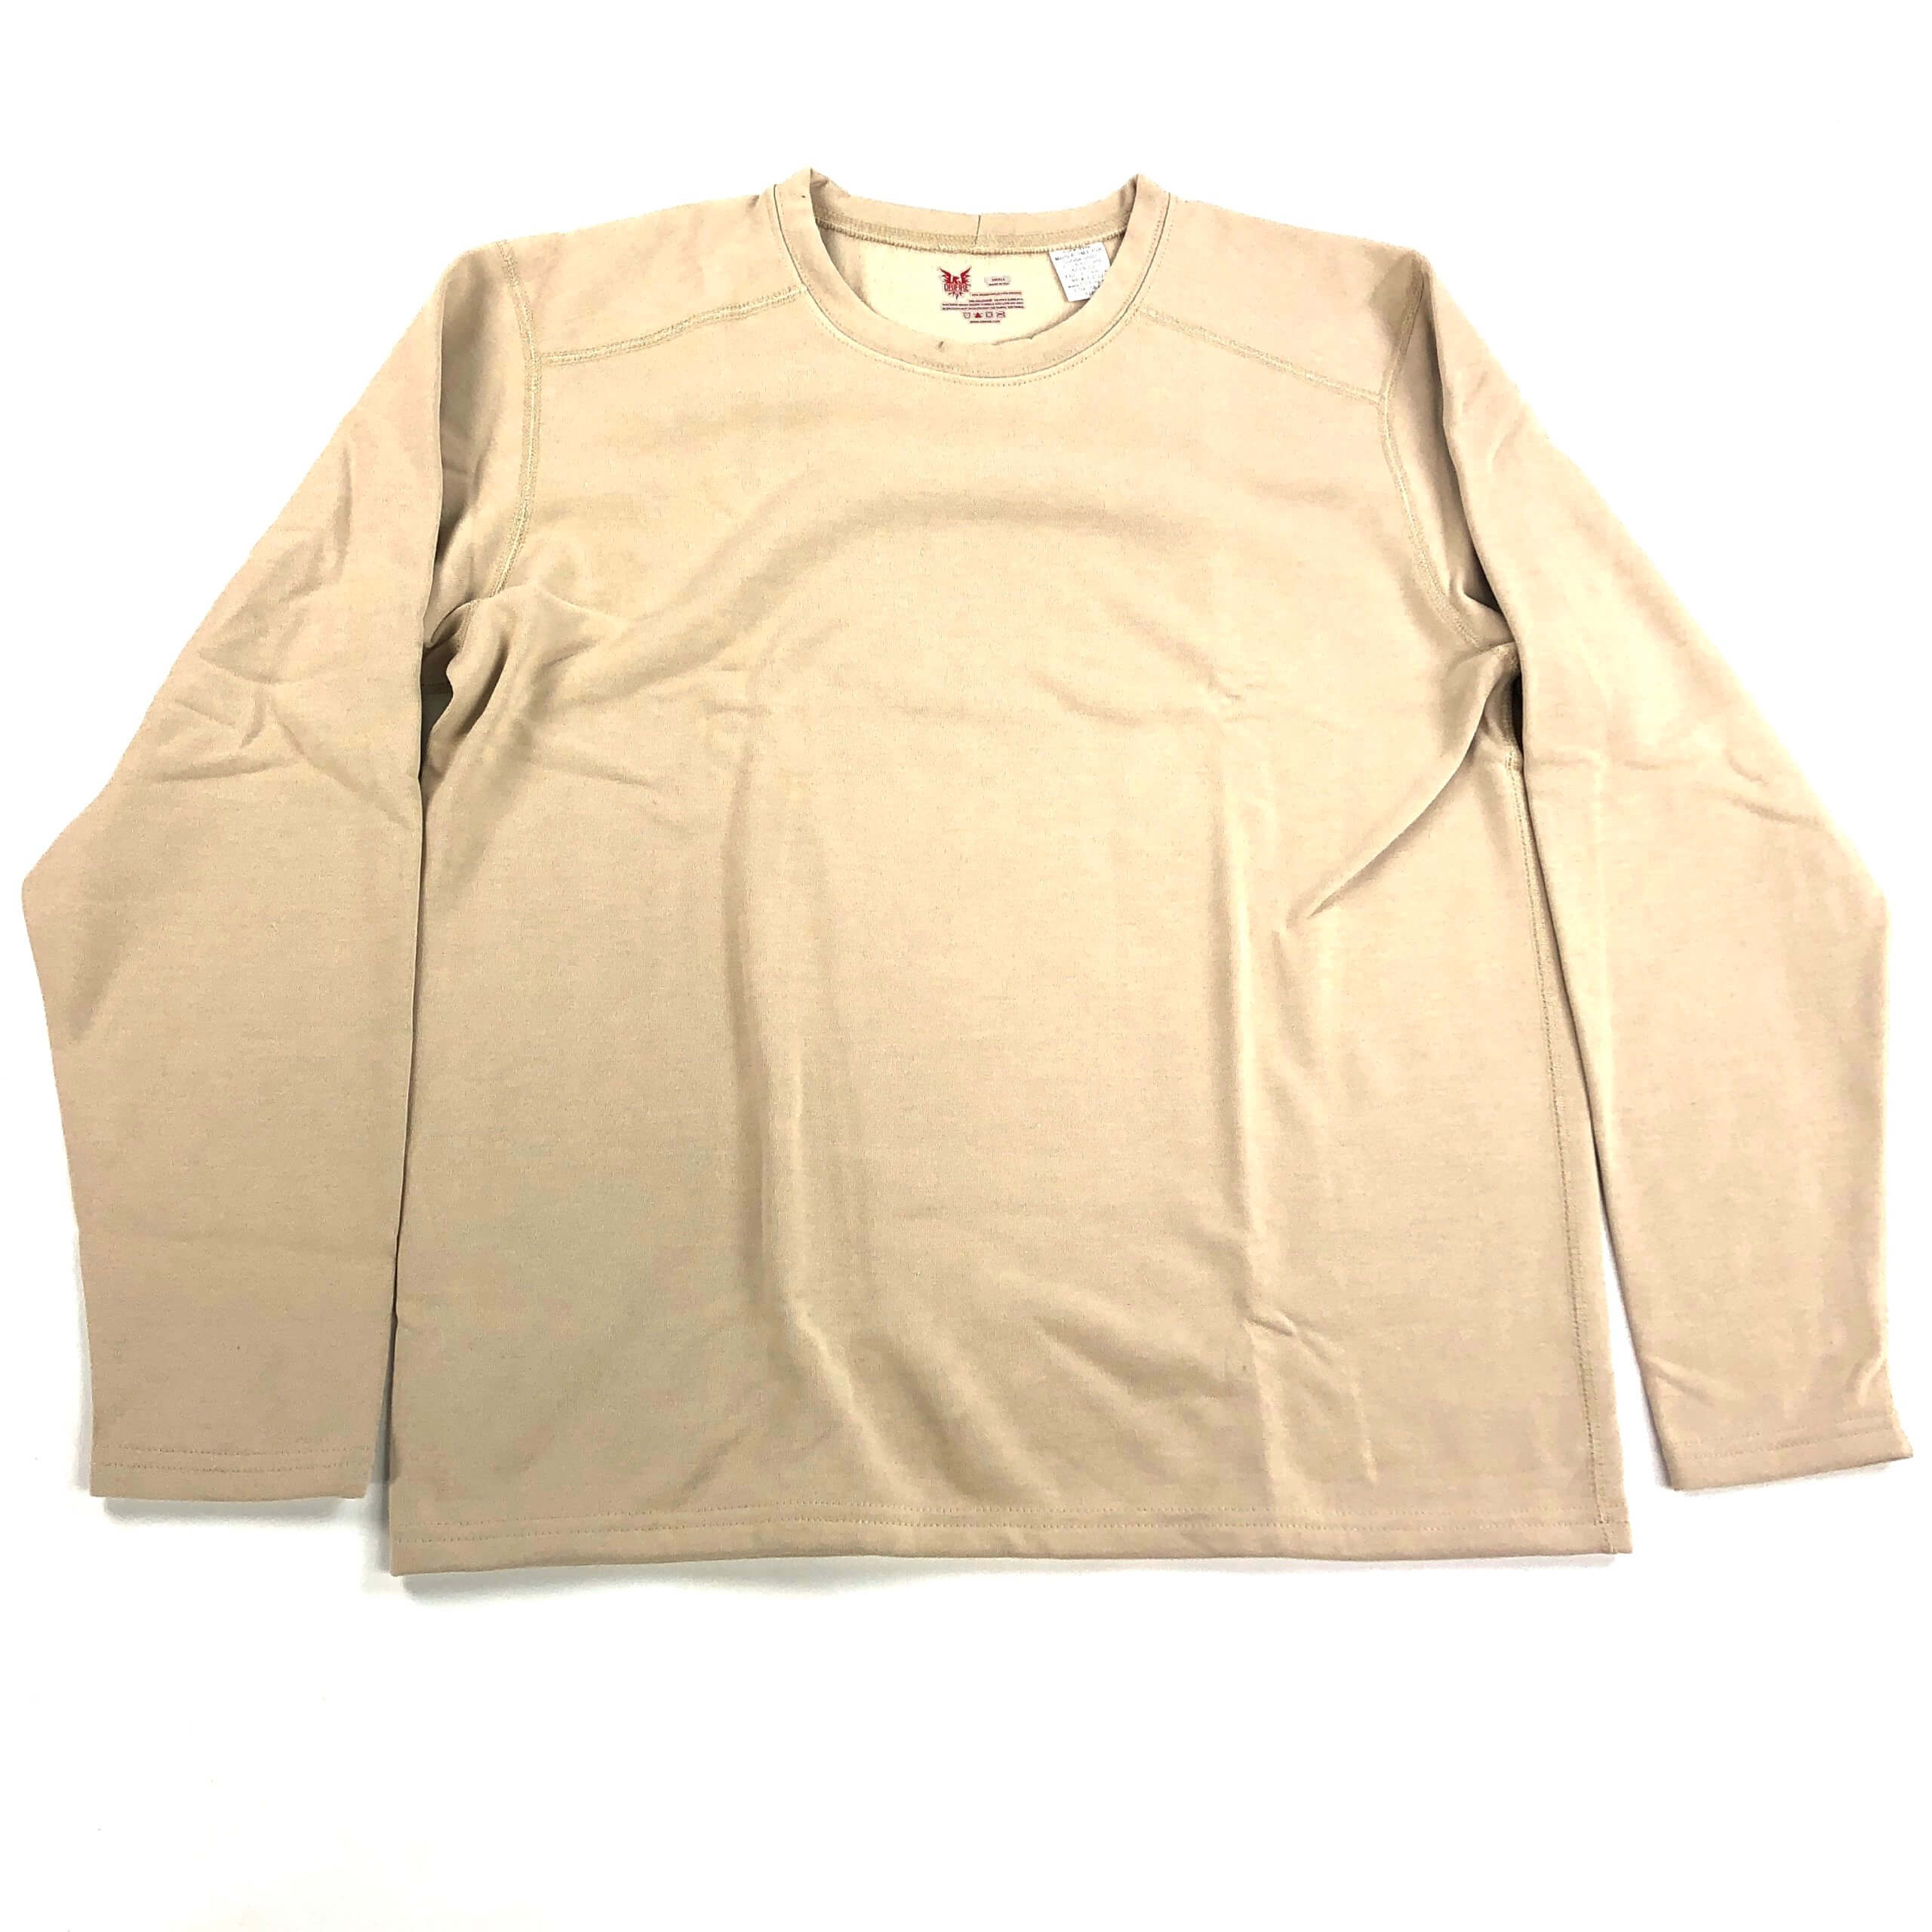 Drifire FR Long Sleeve Fleece Top, Sand Tan [Genuine Issue]